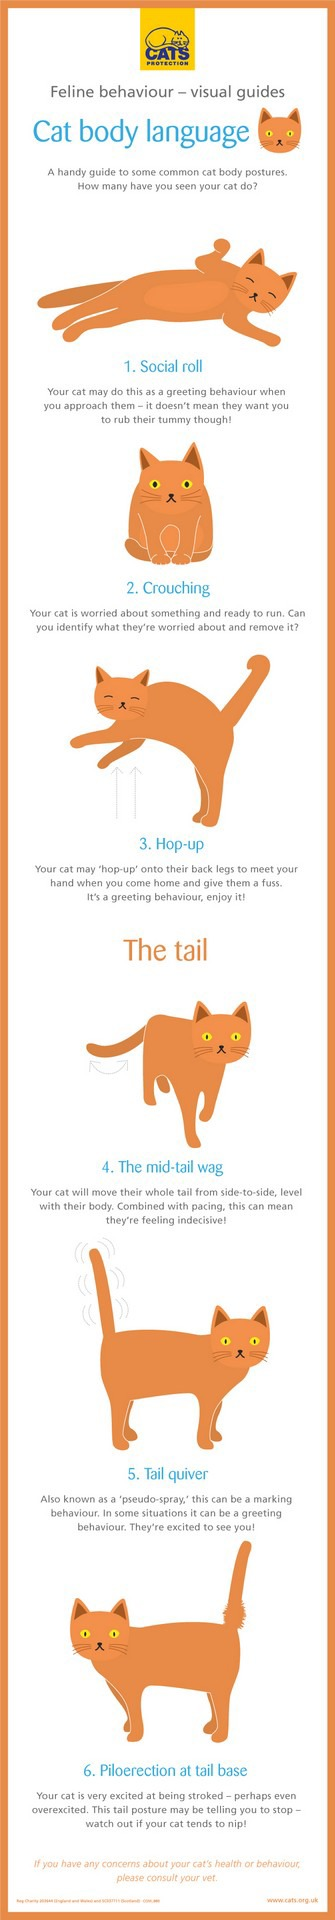 Cat body language behaviour infographic